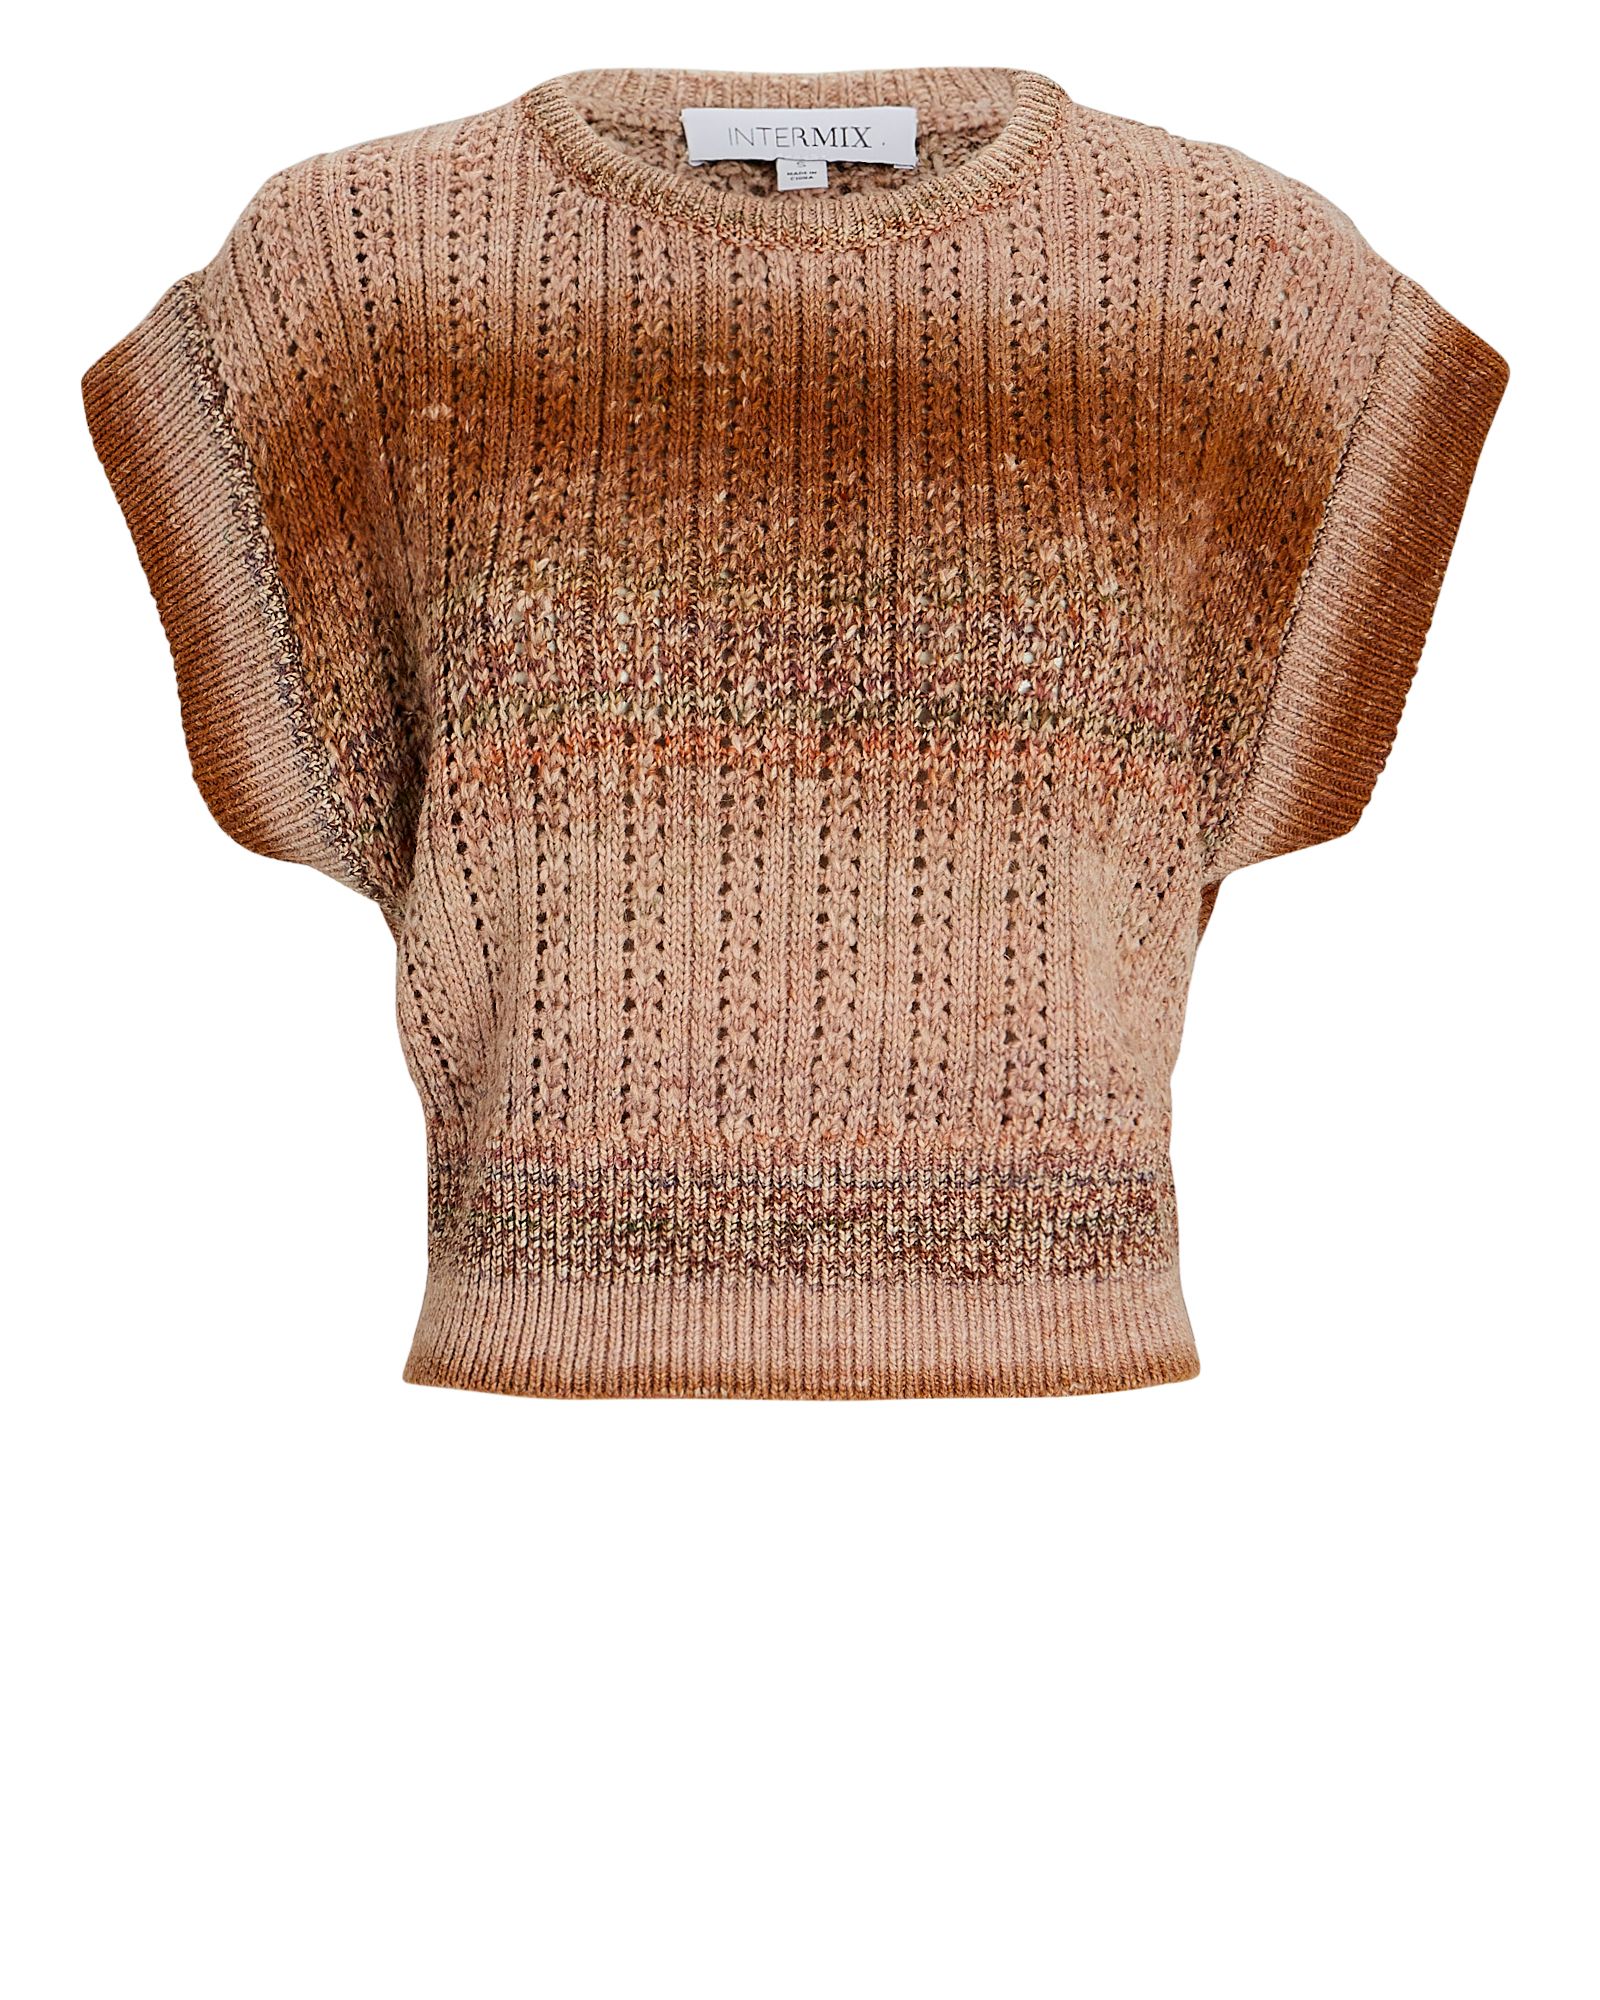 Erica Cropped Ombré Knit Sweater | INTERMIX